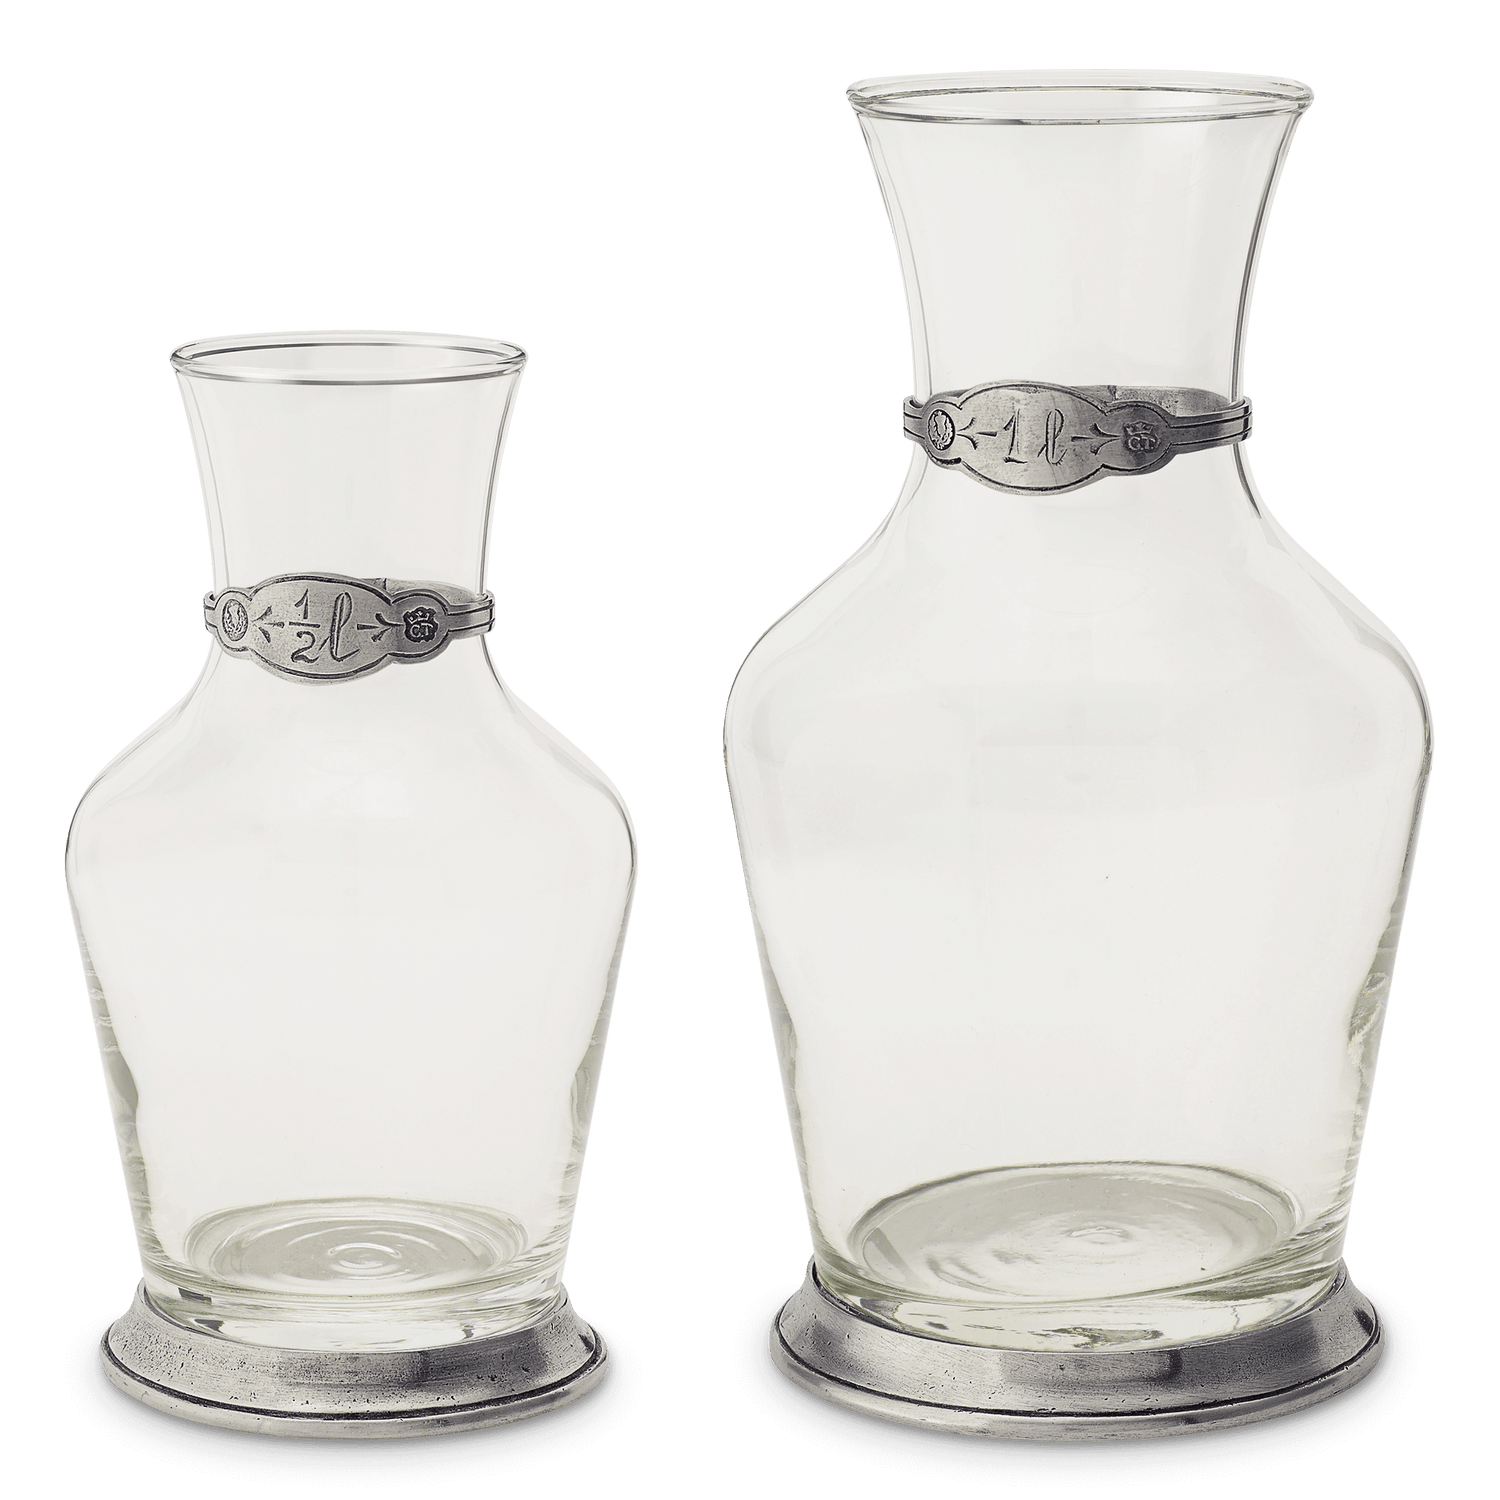 MATCH Pewter Glass Carafe 1/2 Litre